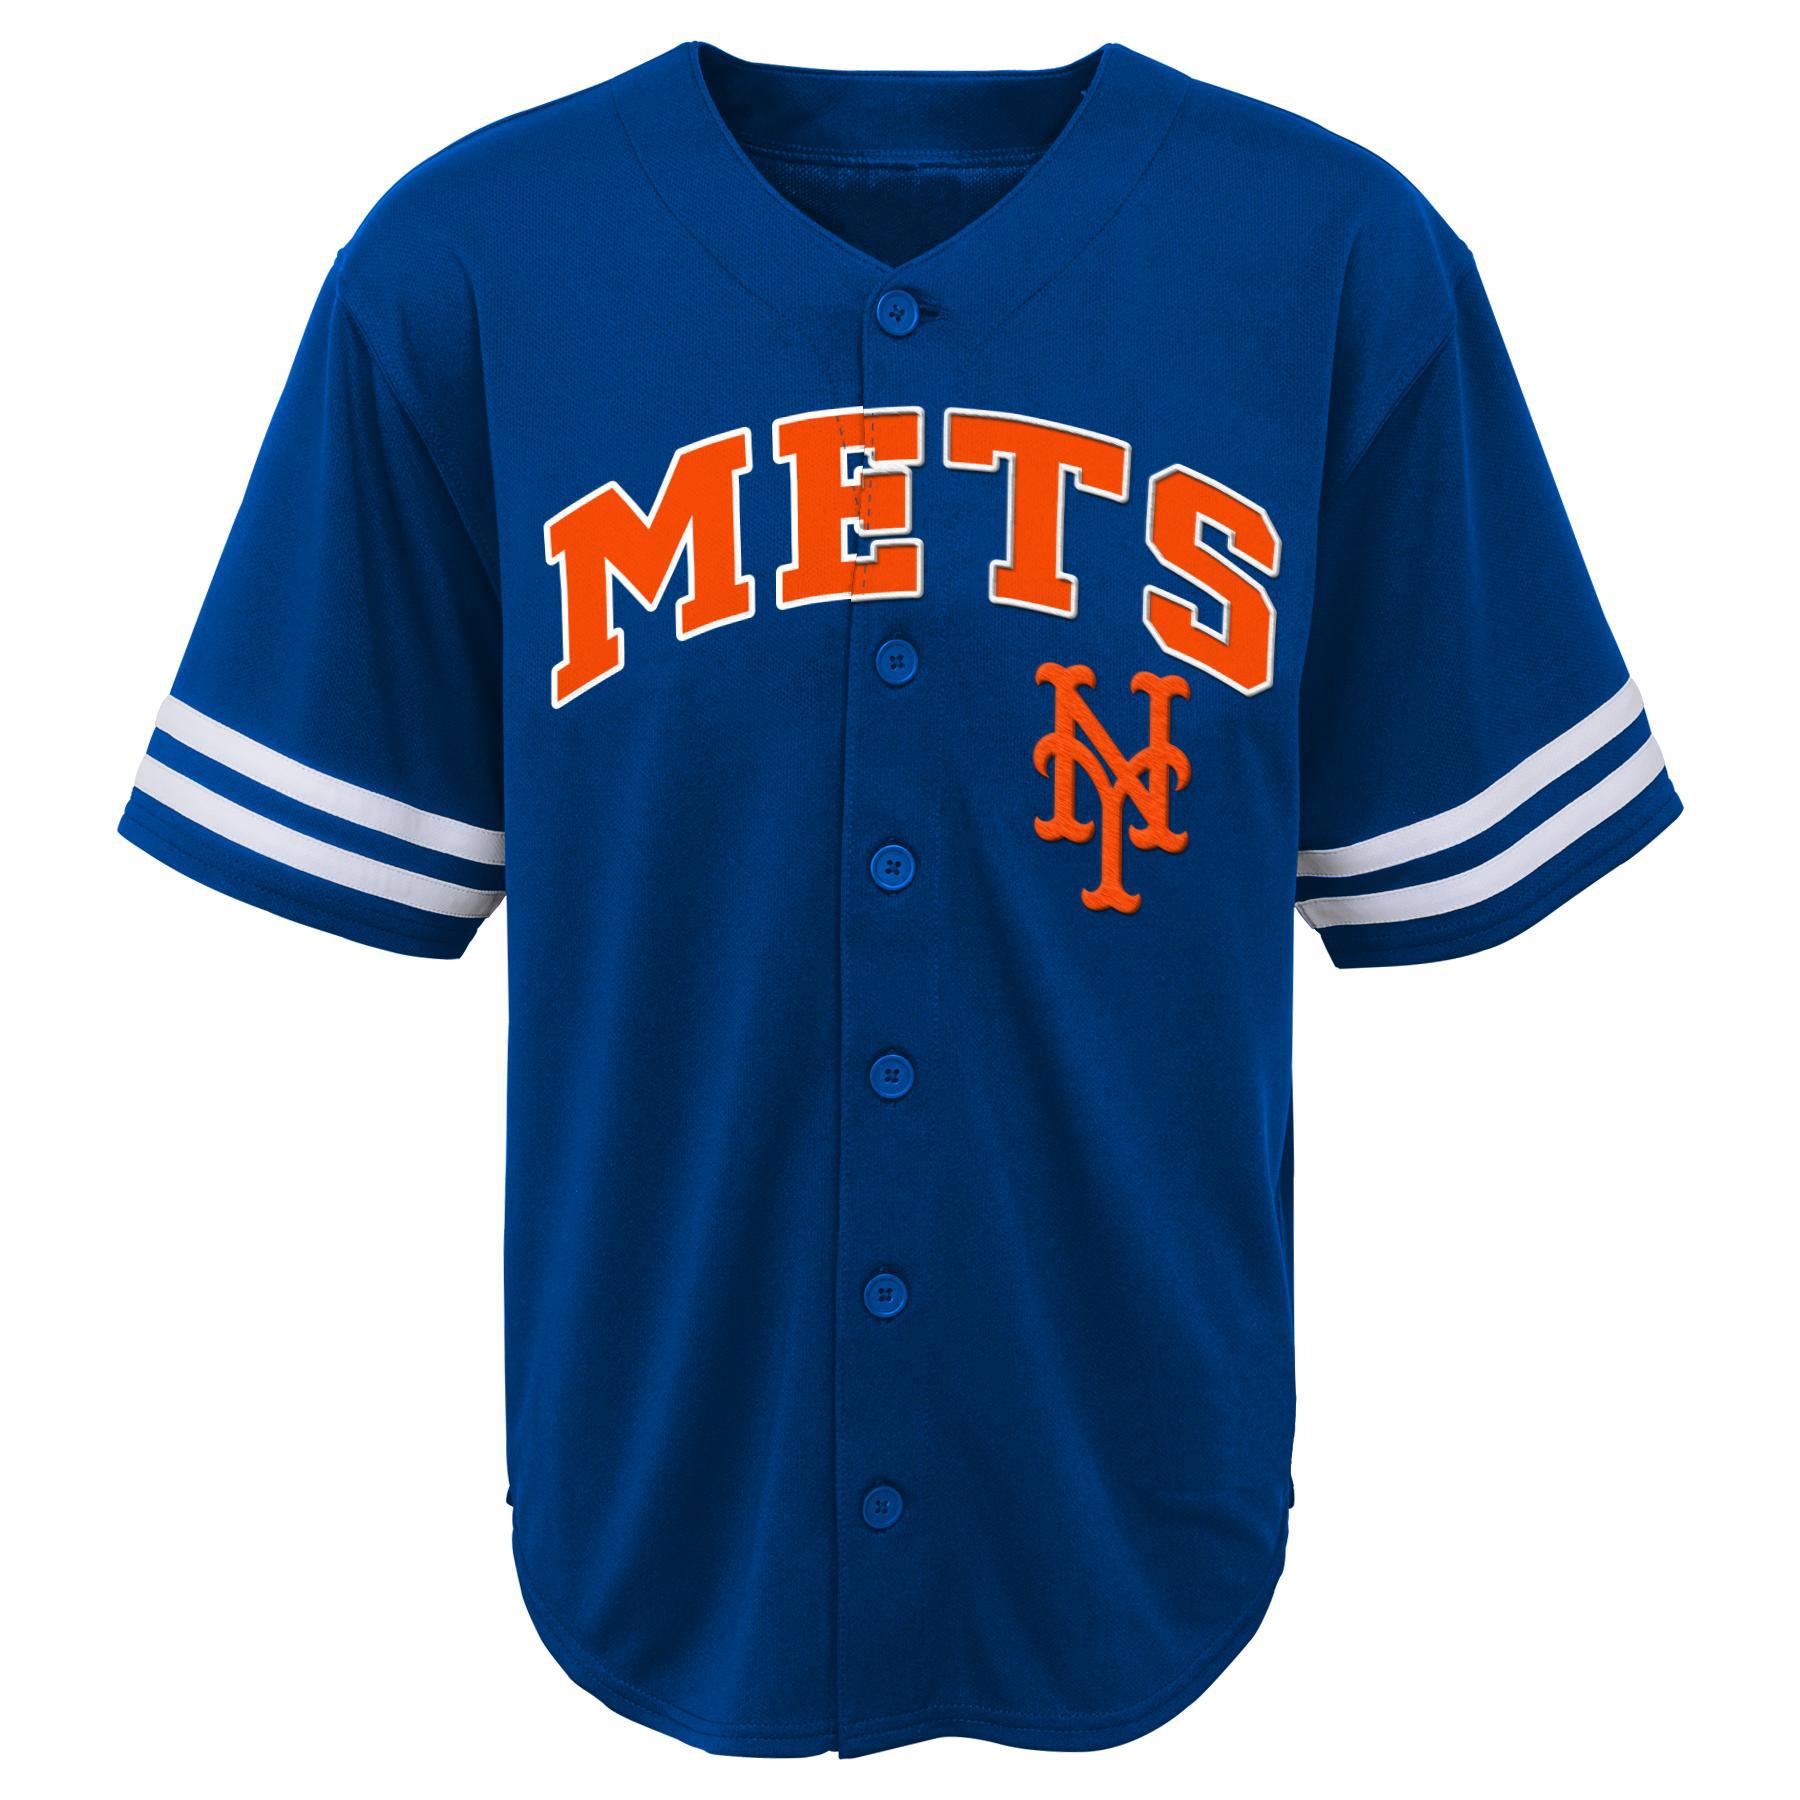 MLB Boys' Jersey - New York Mets